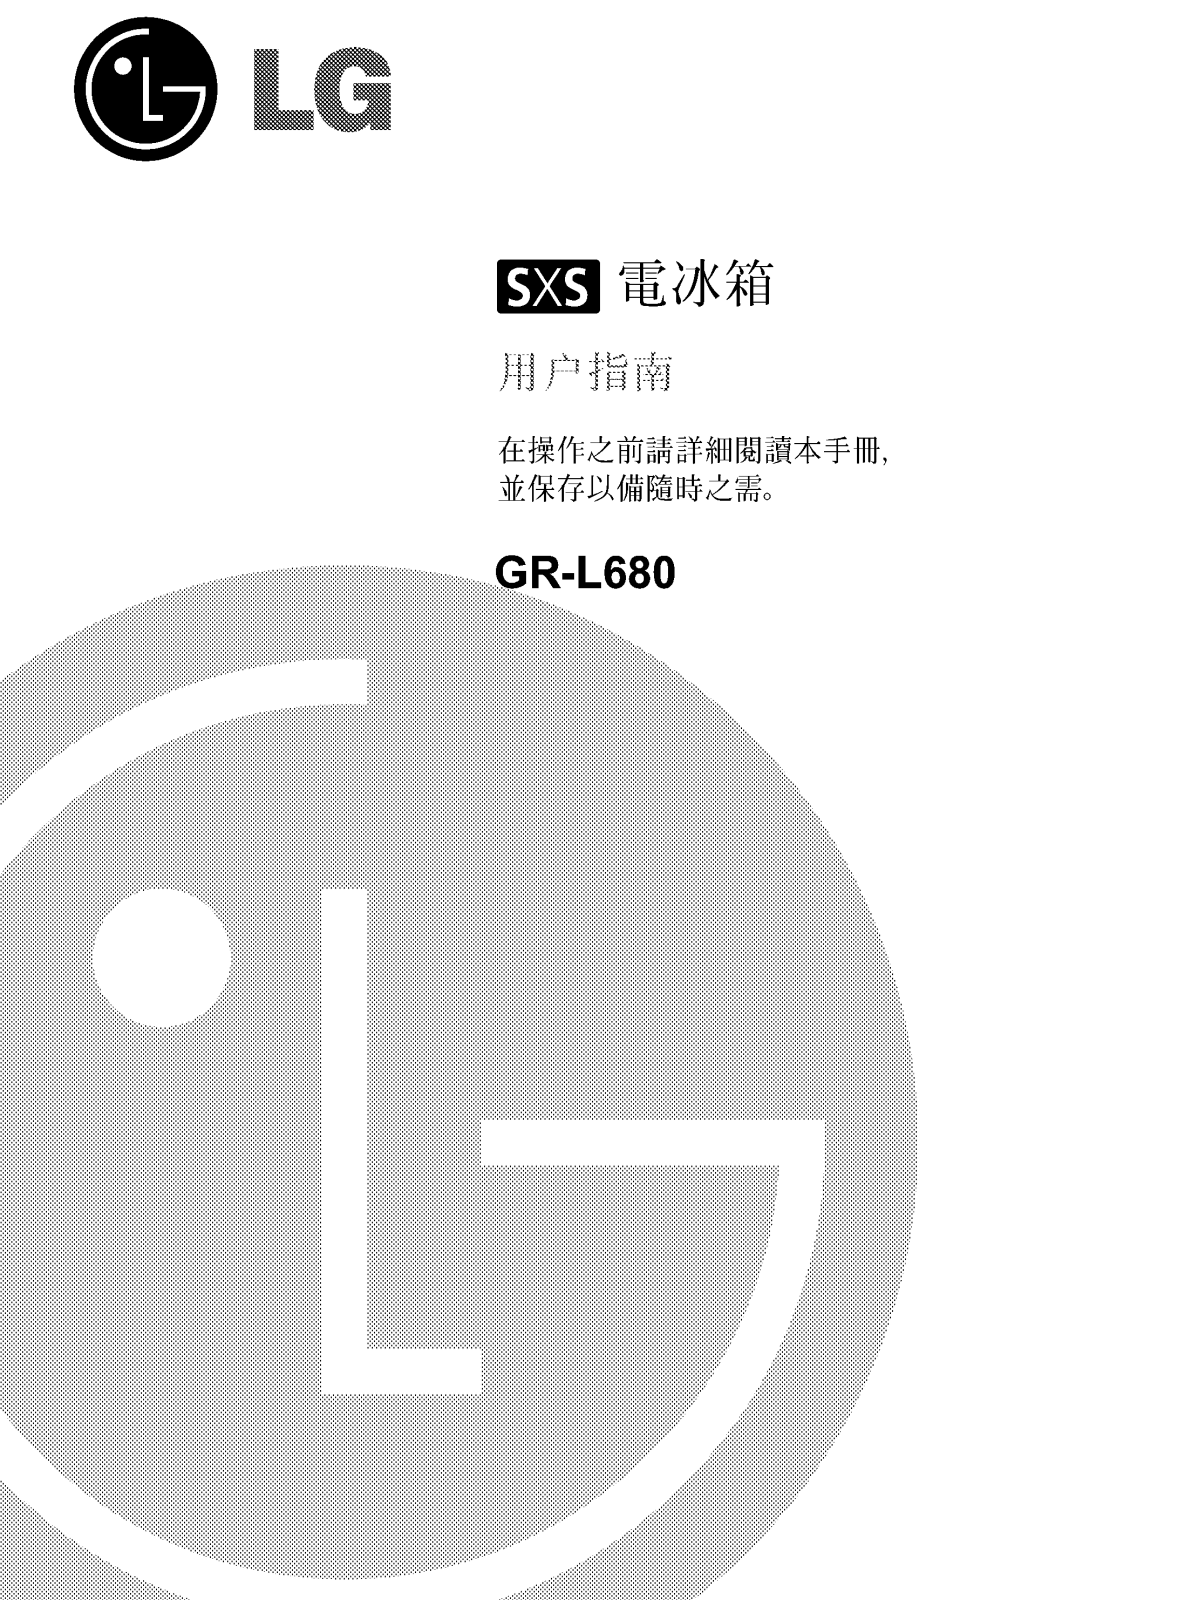 Lg GR-L680 User Manual